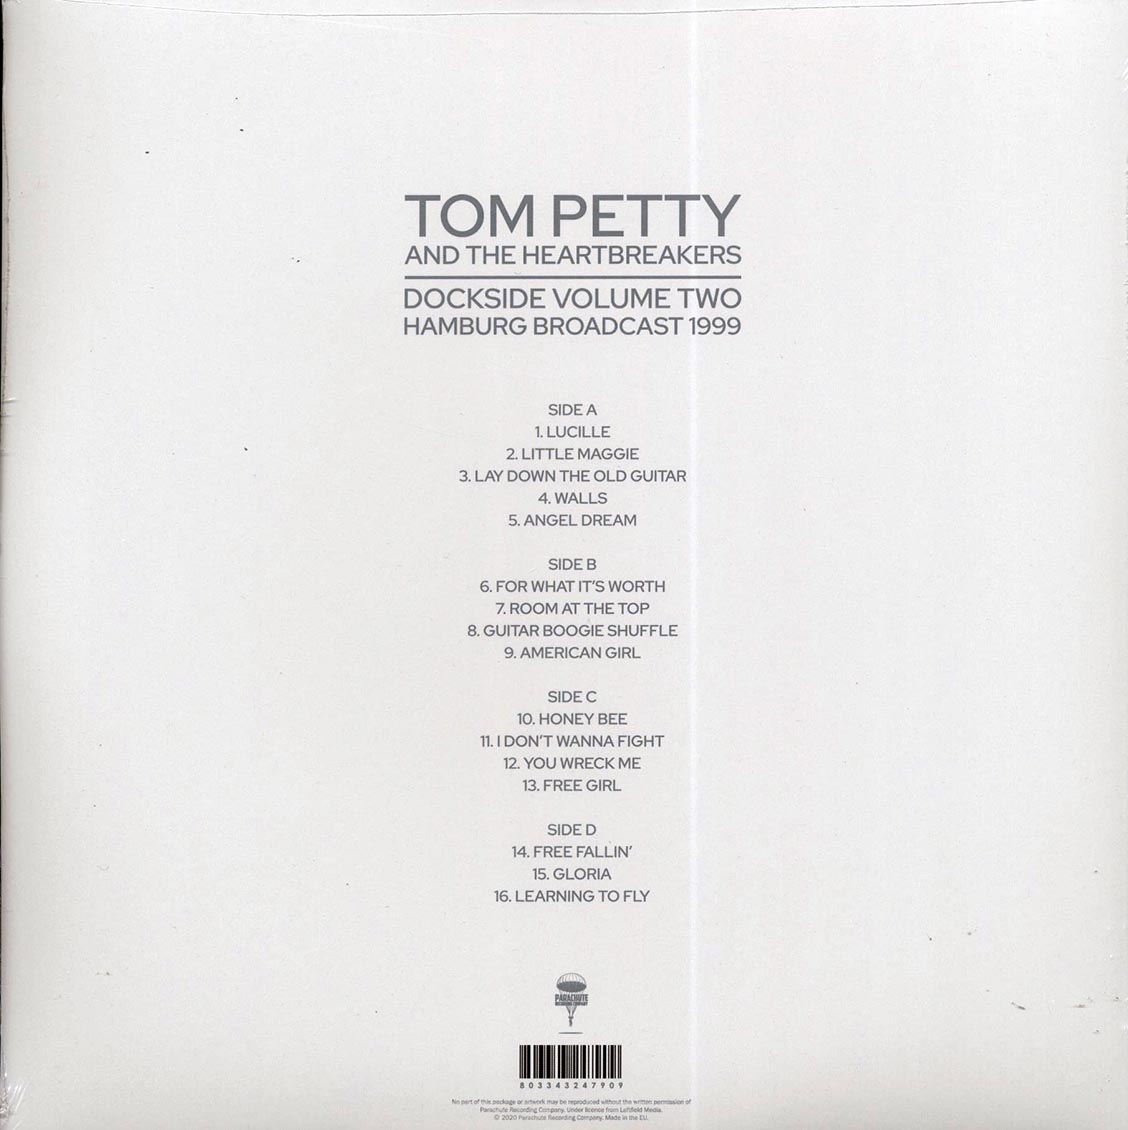 Tom Petty & The Heartbreakers - Dockside Volume 2: Hamburg Broadcast 1999